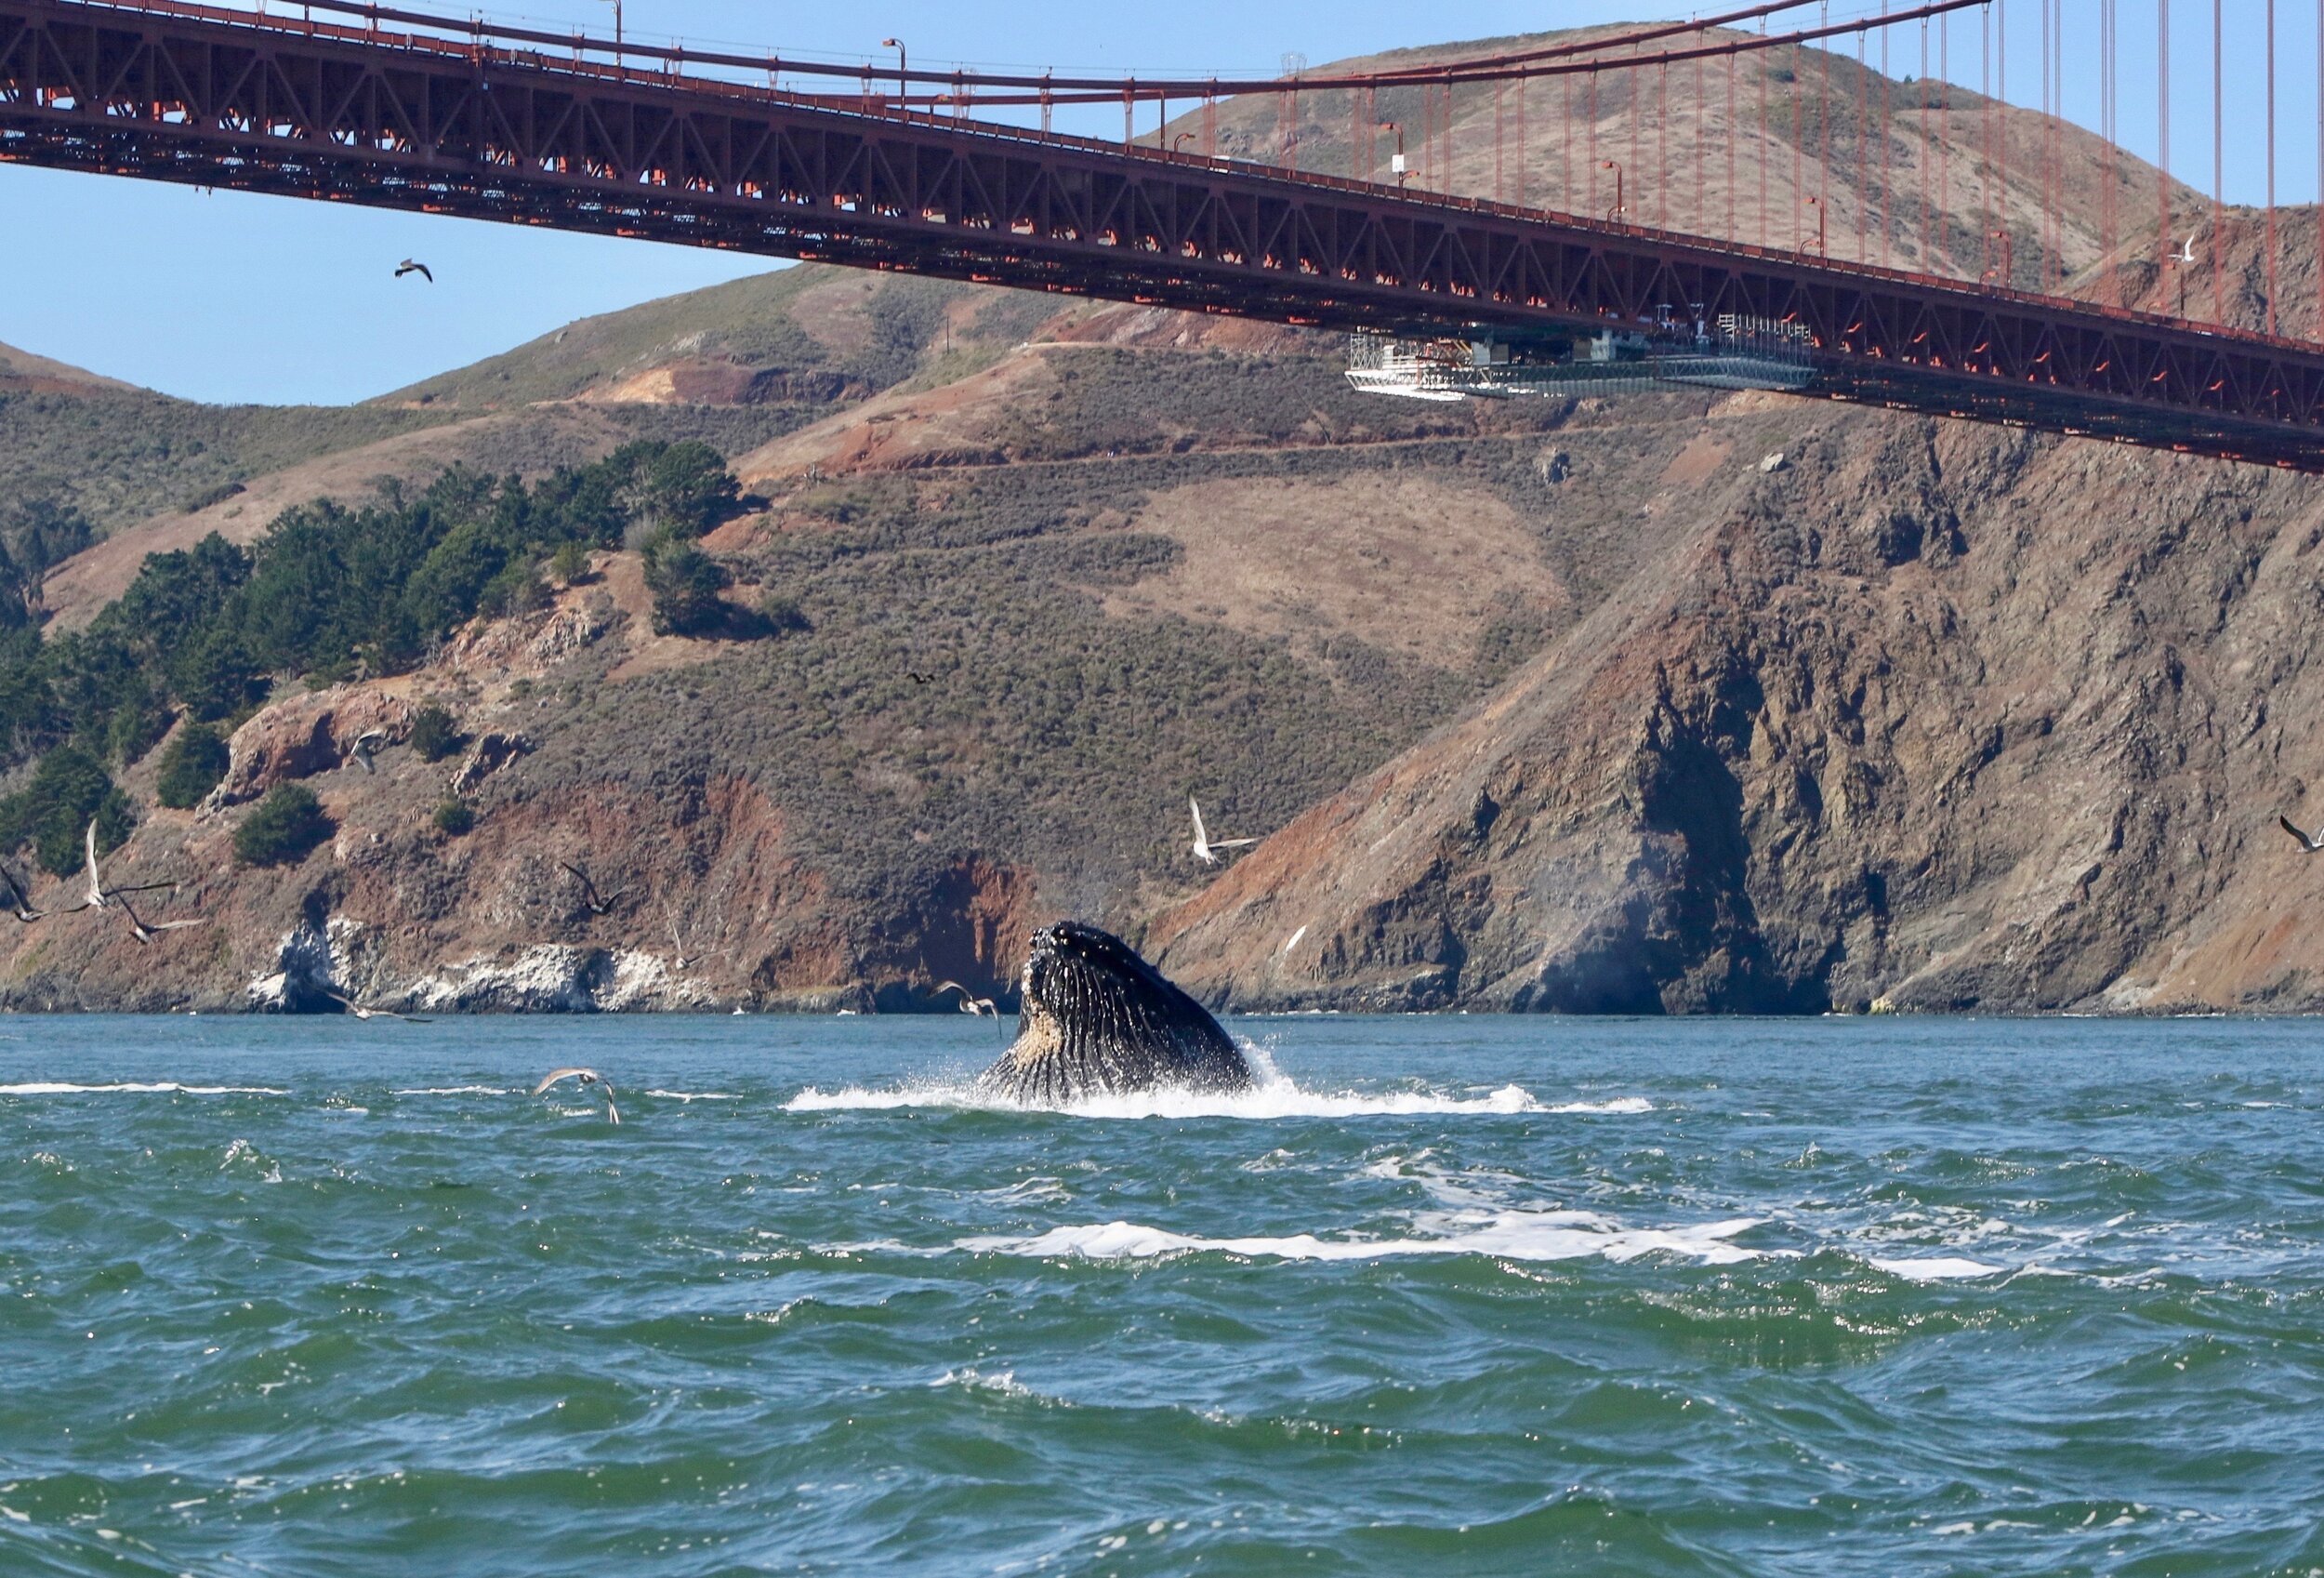 Humpback whale beneath the Golden Gate Bridge, photo by Tim Markowitz